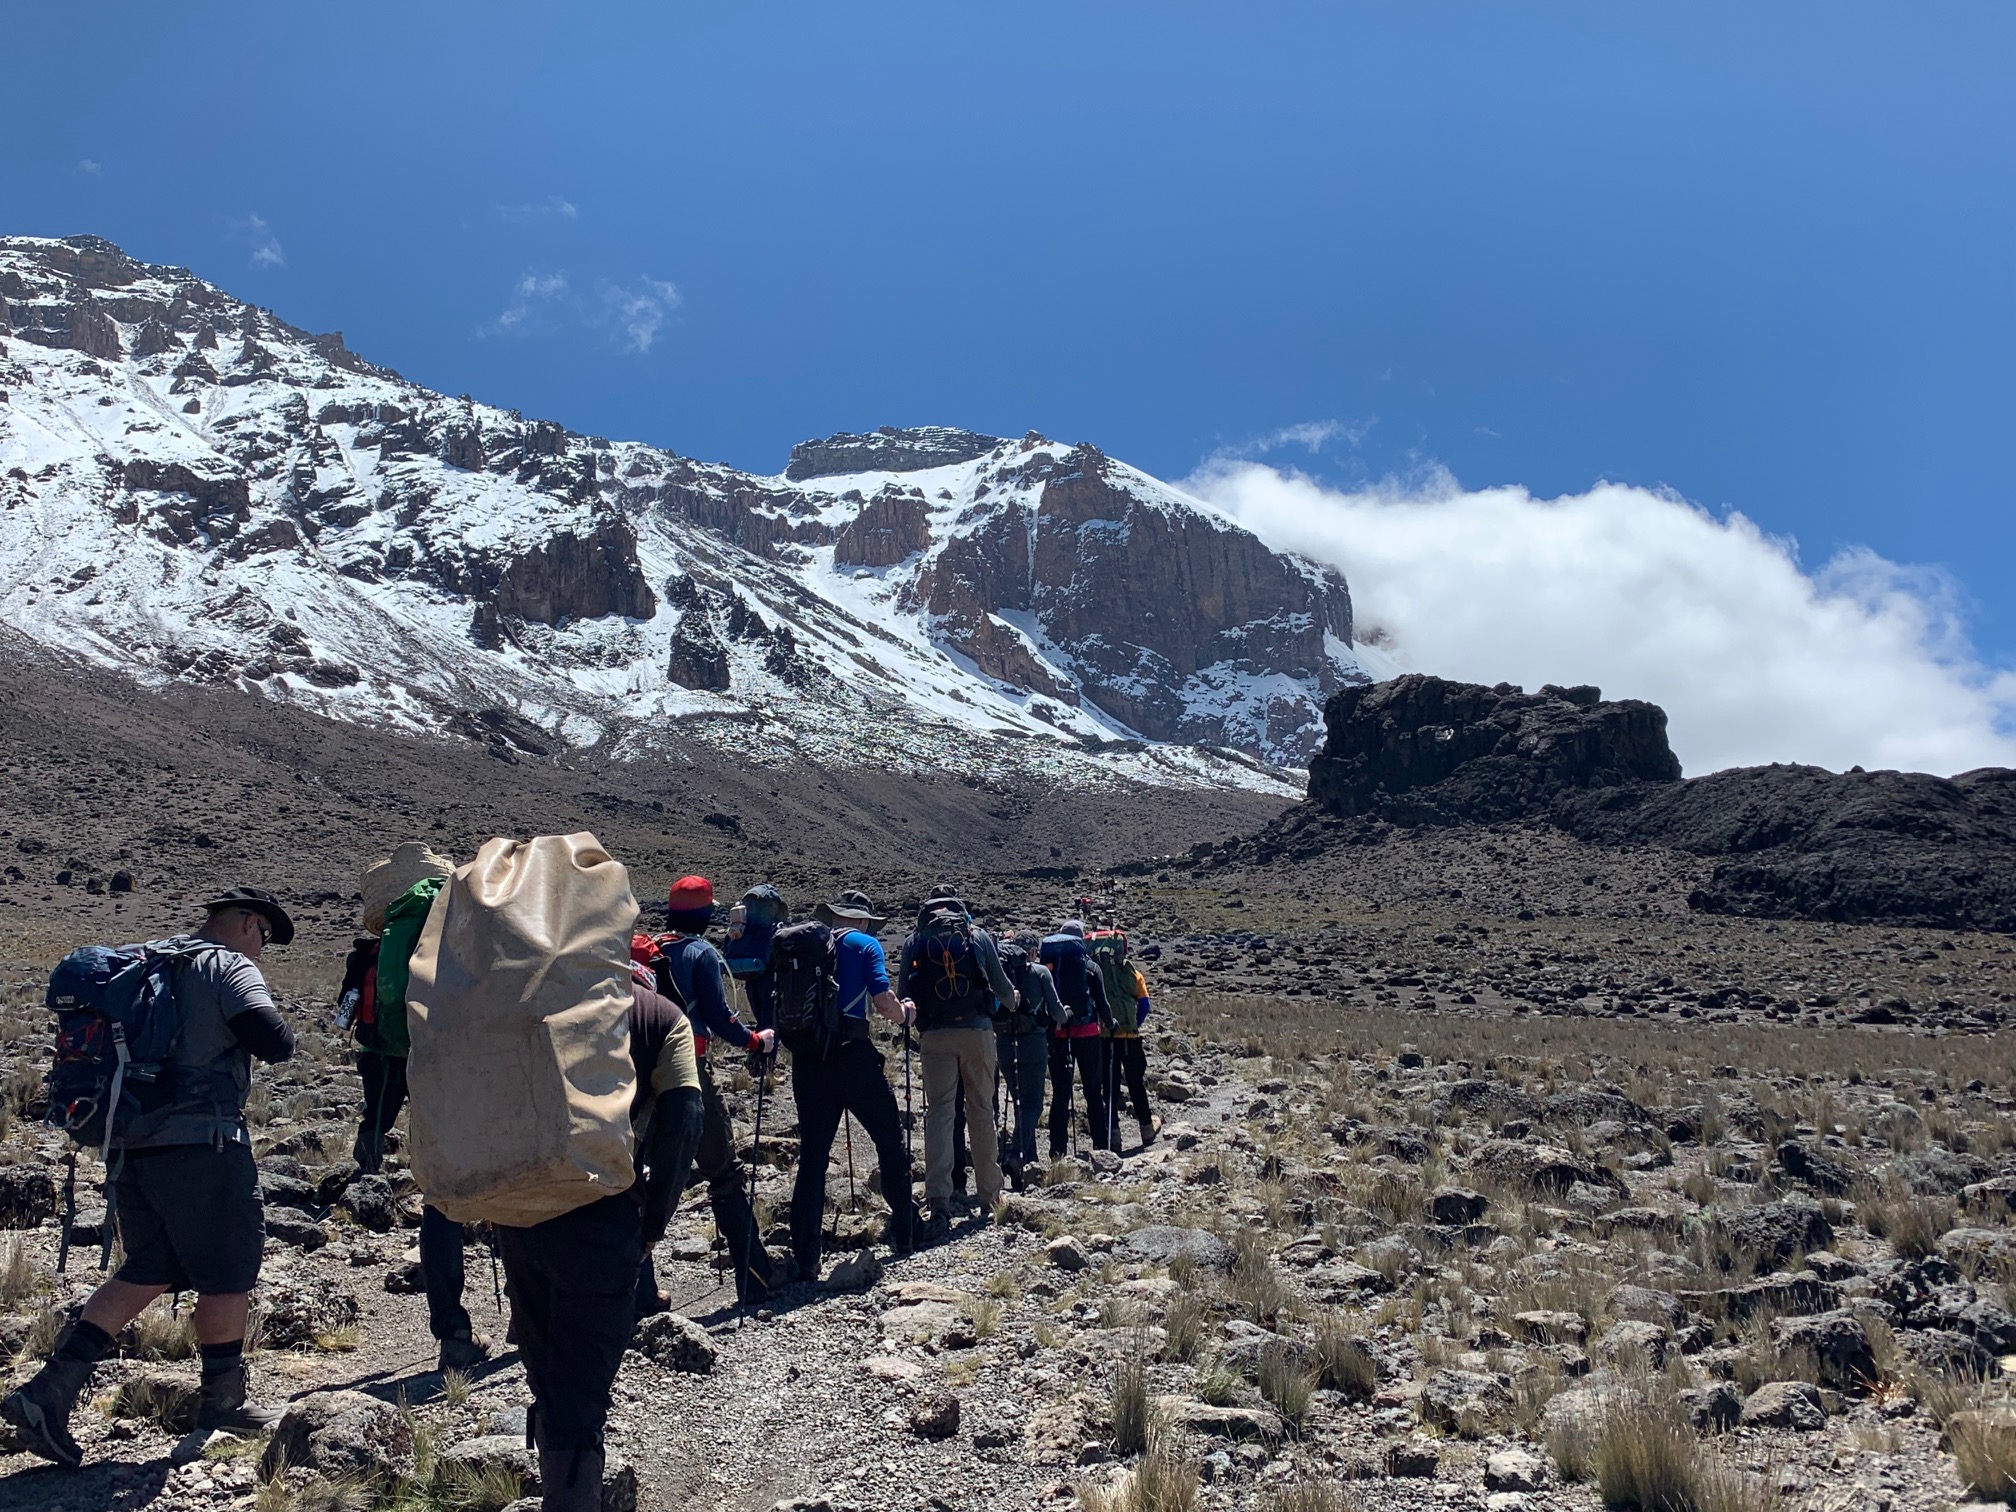 The Lava Tower on Kilimanjaro